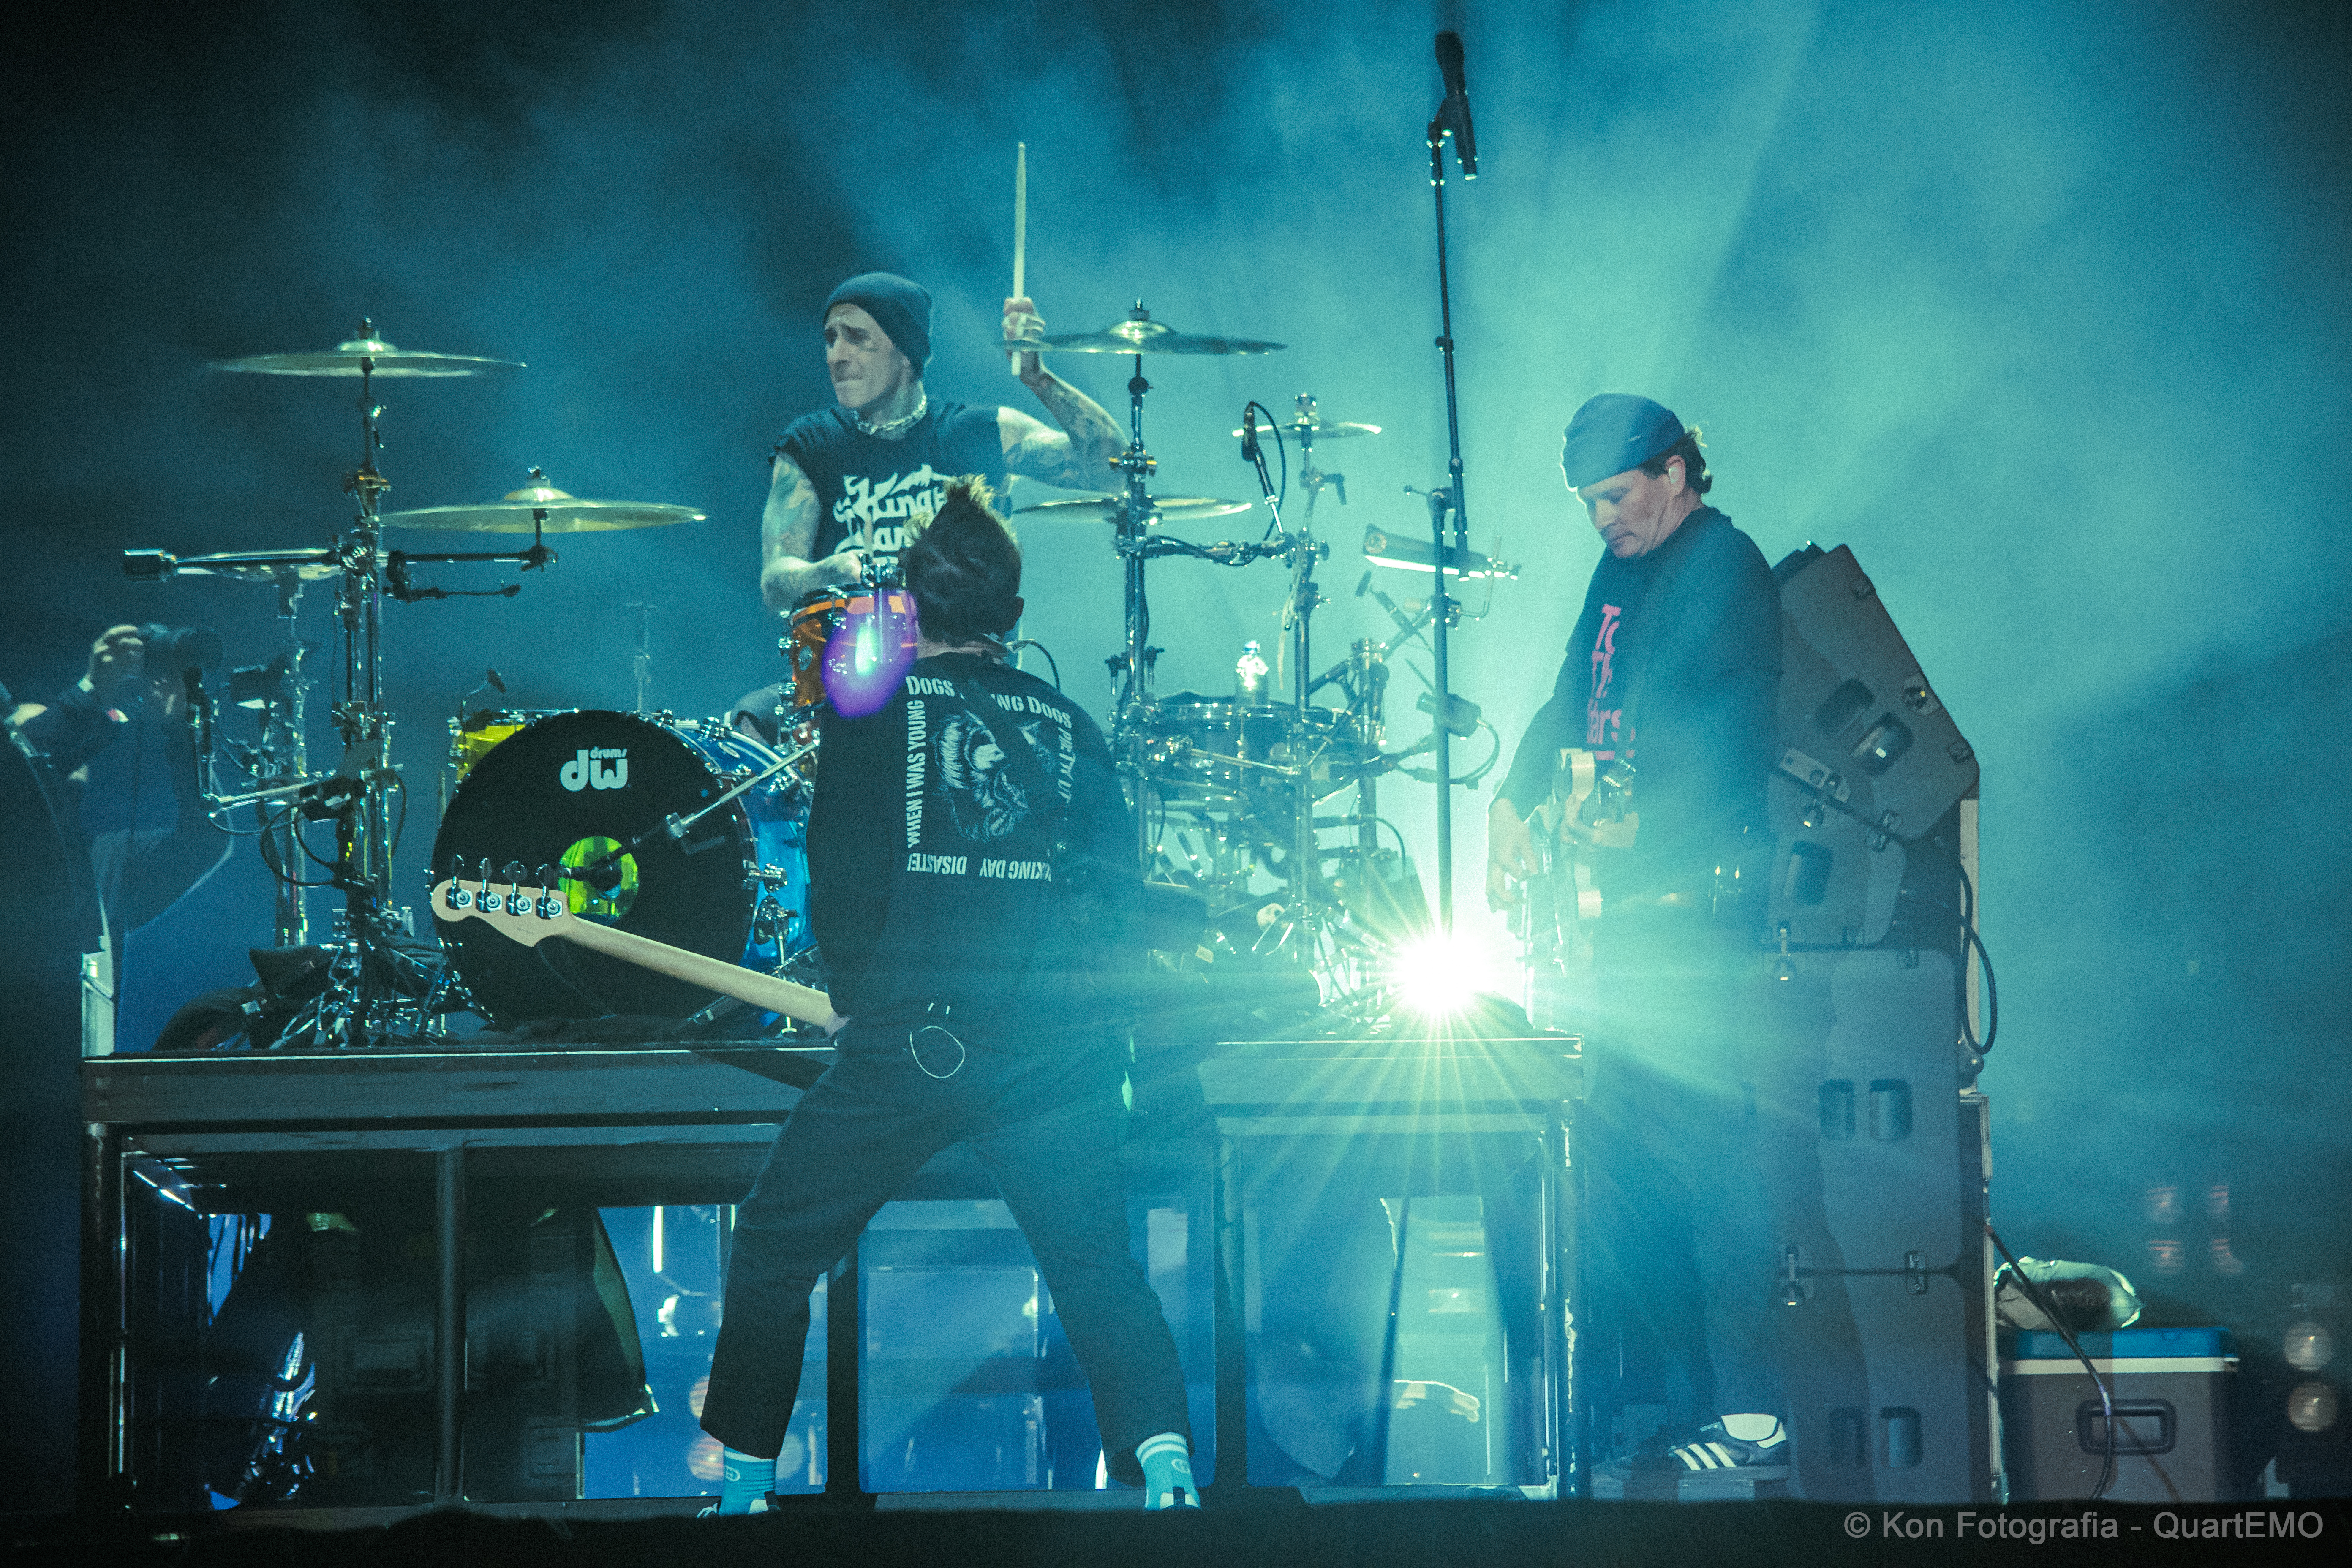 Lollapalooza: O show do blink-182 no Brasil aconteceu e superou expectativas.